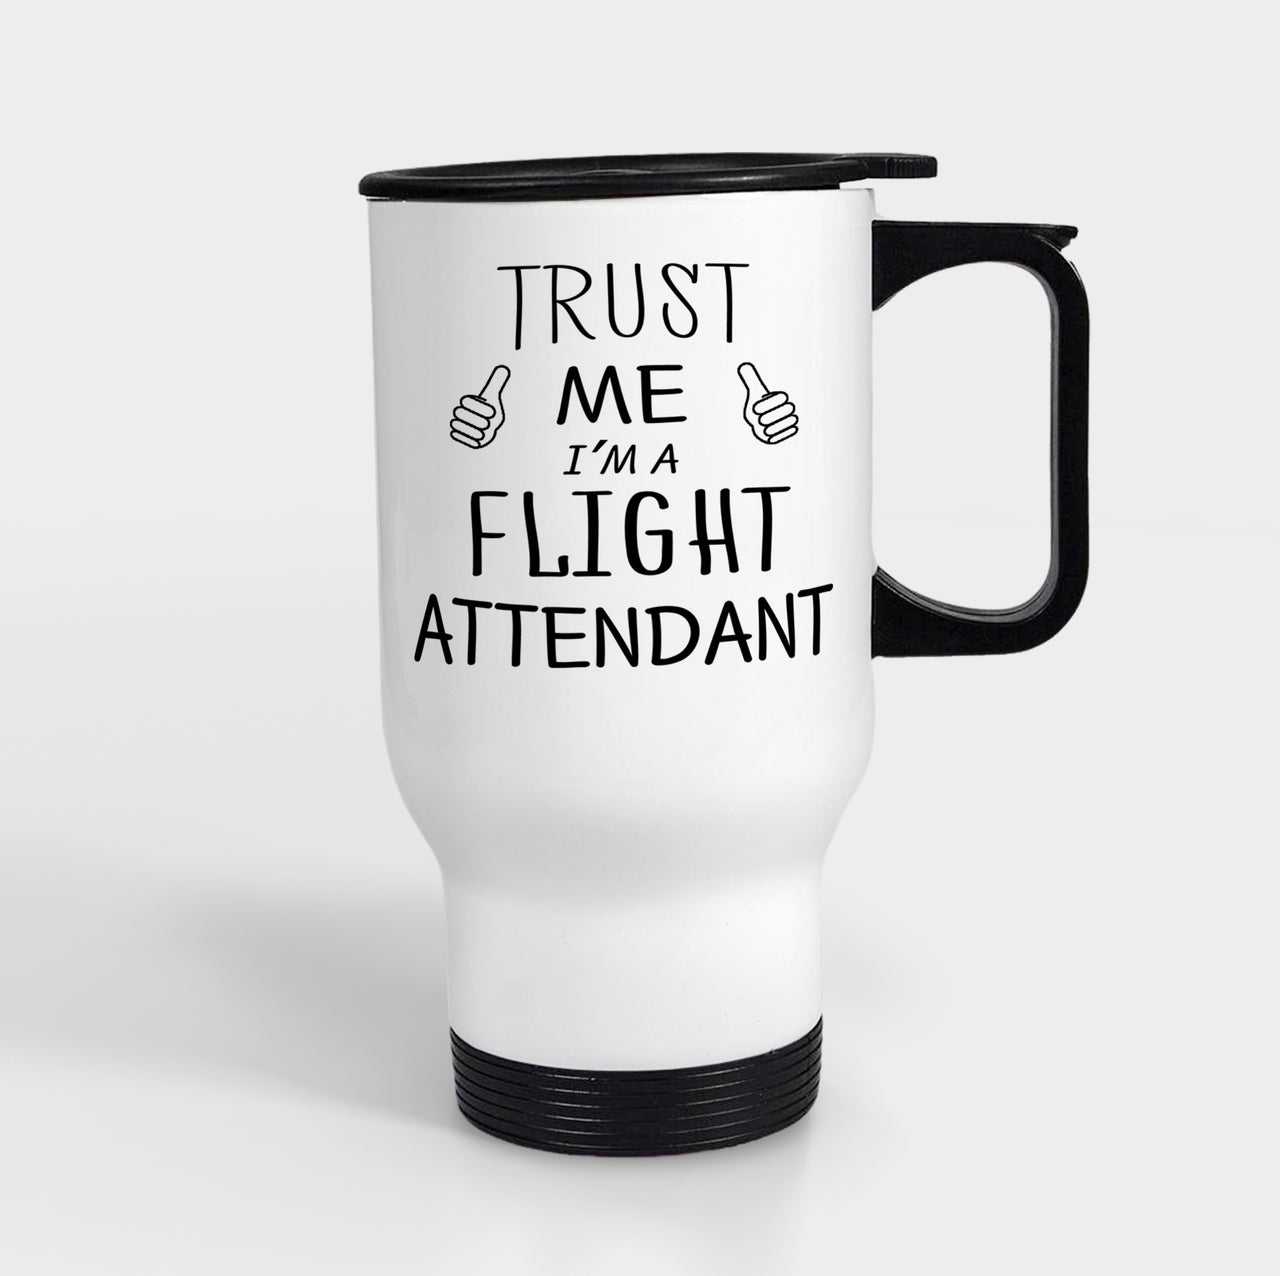 Trust Me I'm a Flight Attendant Designed Travel Mugs (With Holder)